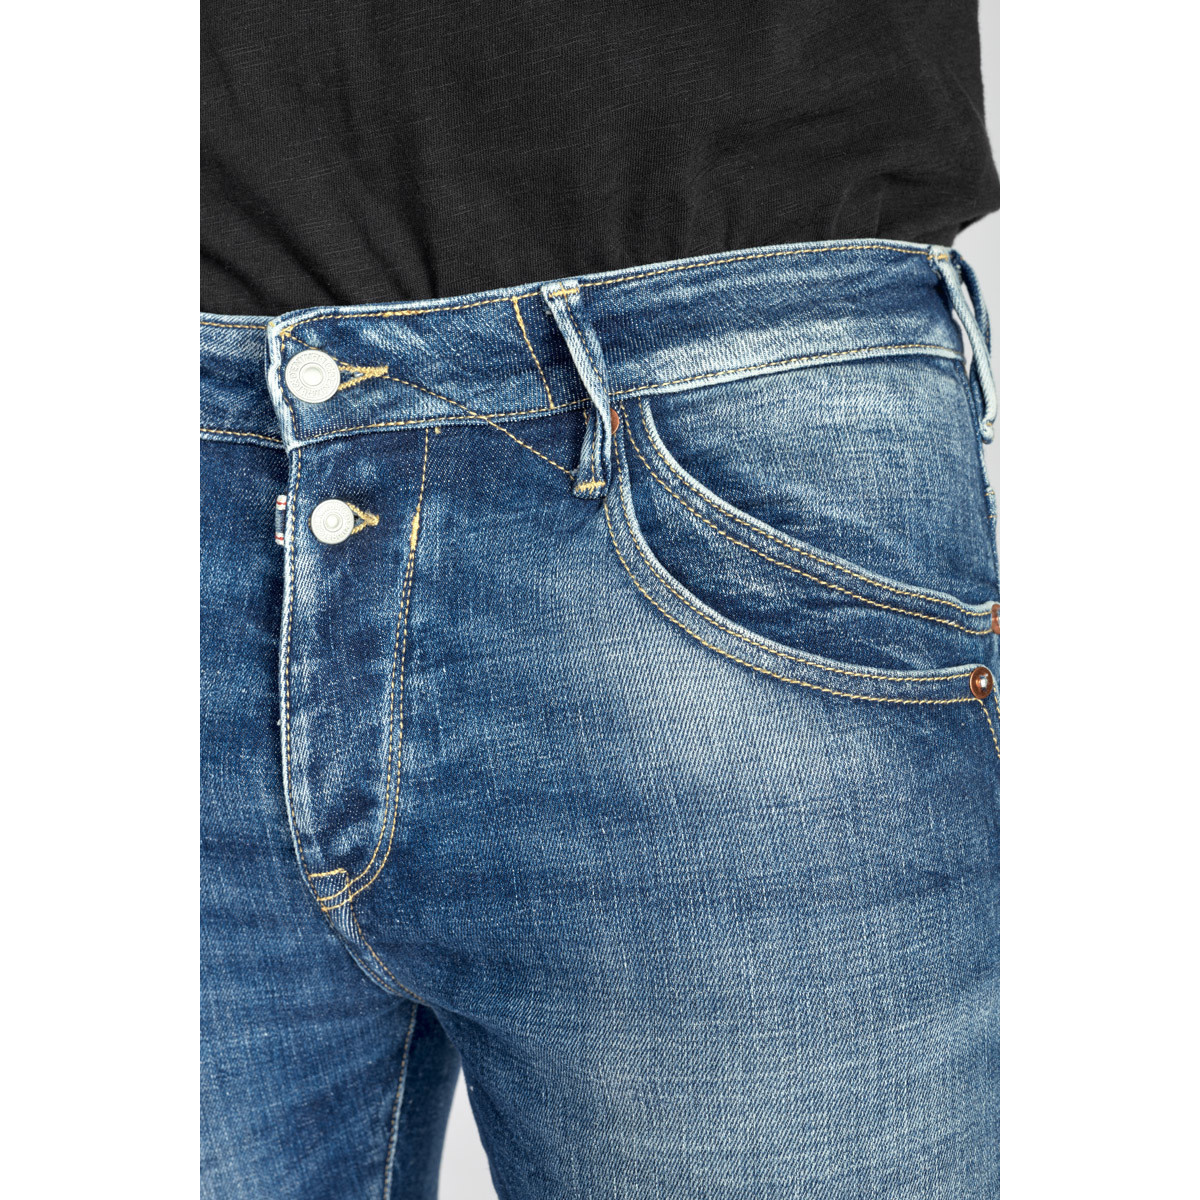 Le Temps des Cerises Bleu Nagold 900/16 tapered jeans bleu qu8MnVKH